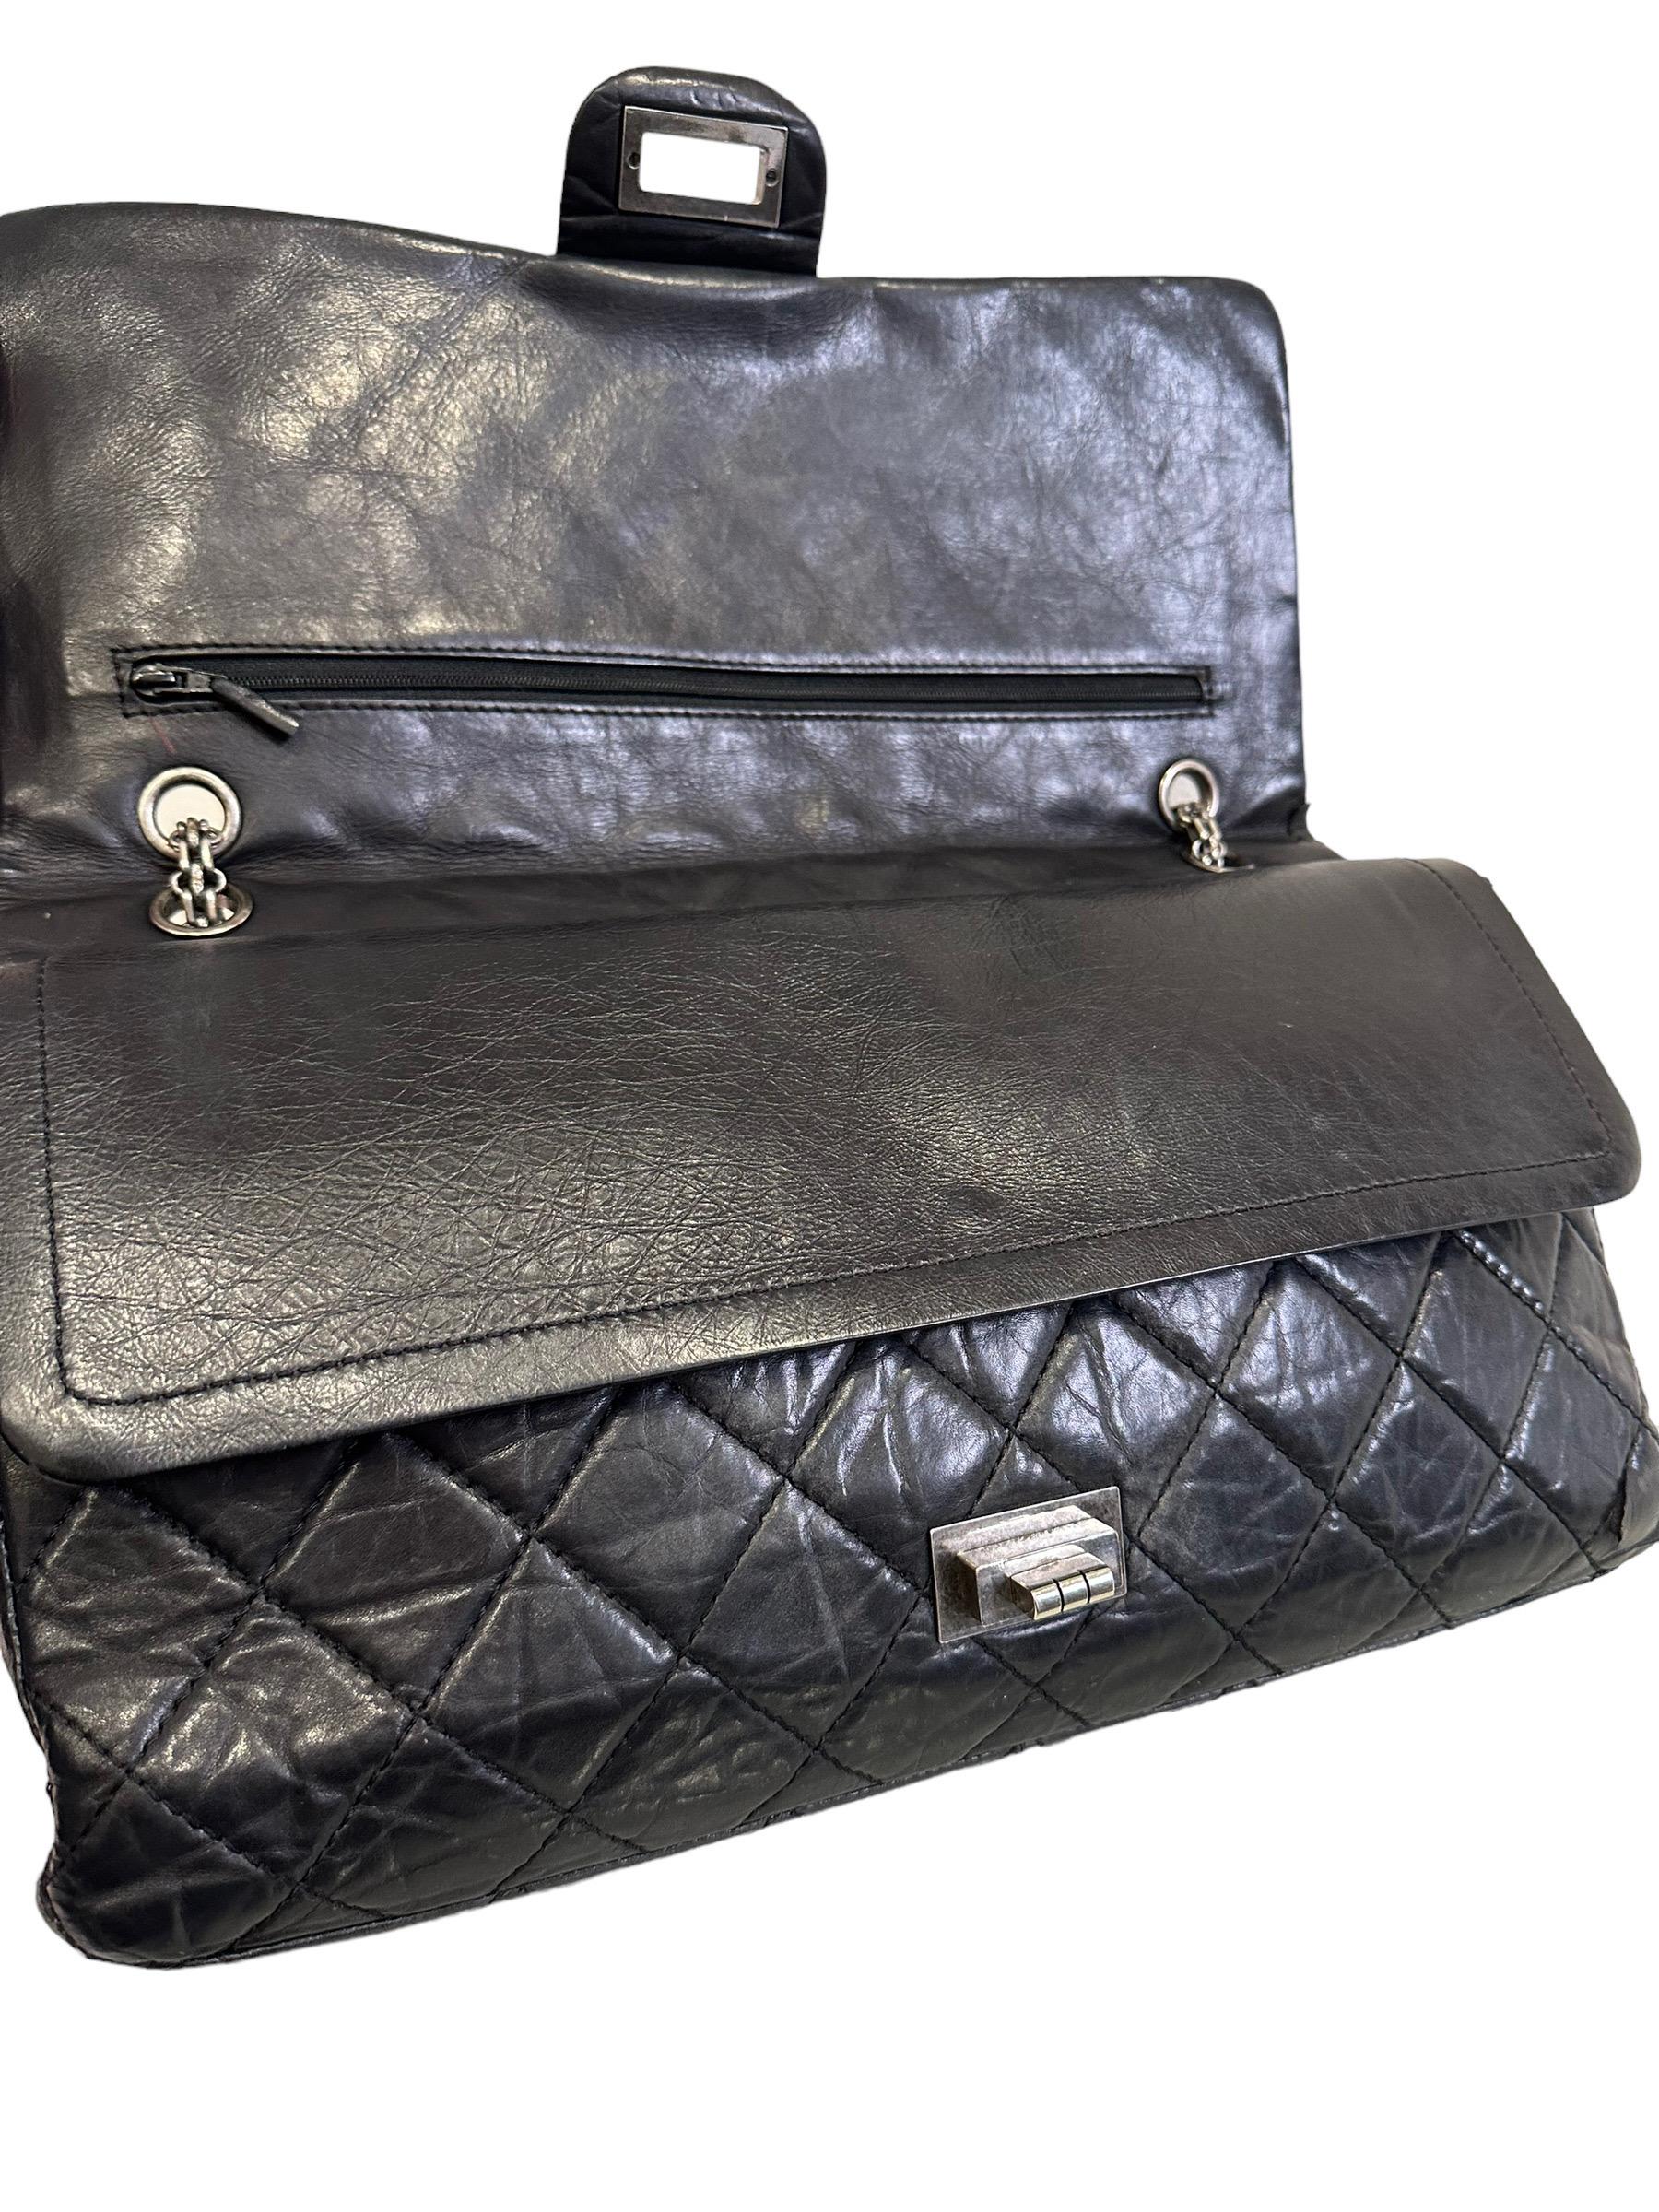 2008 Chanel Reissue Maxi Jumbo Blue Top Shoulder Bag For Sale 14